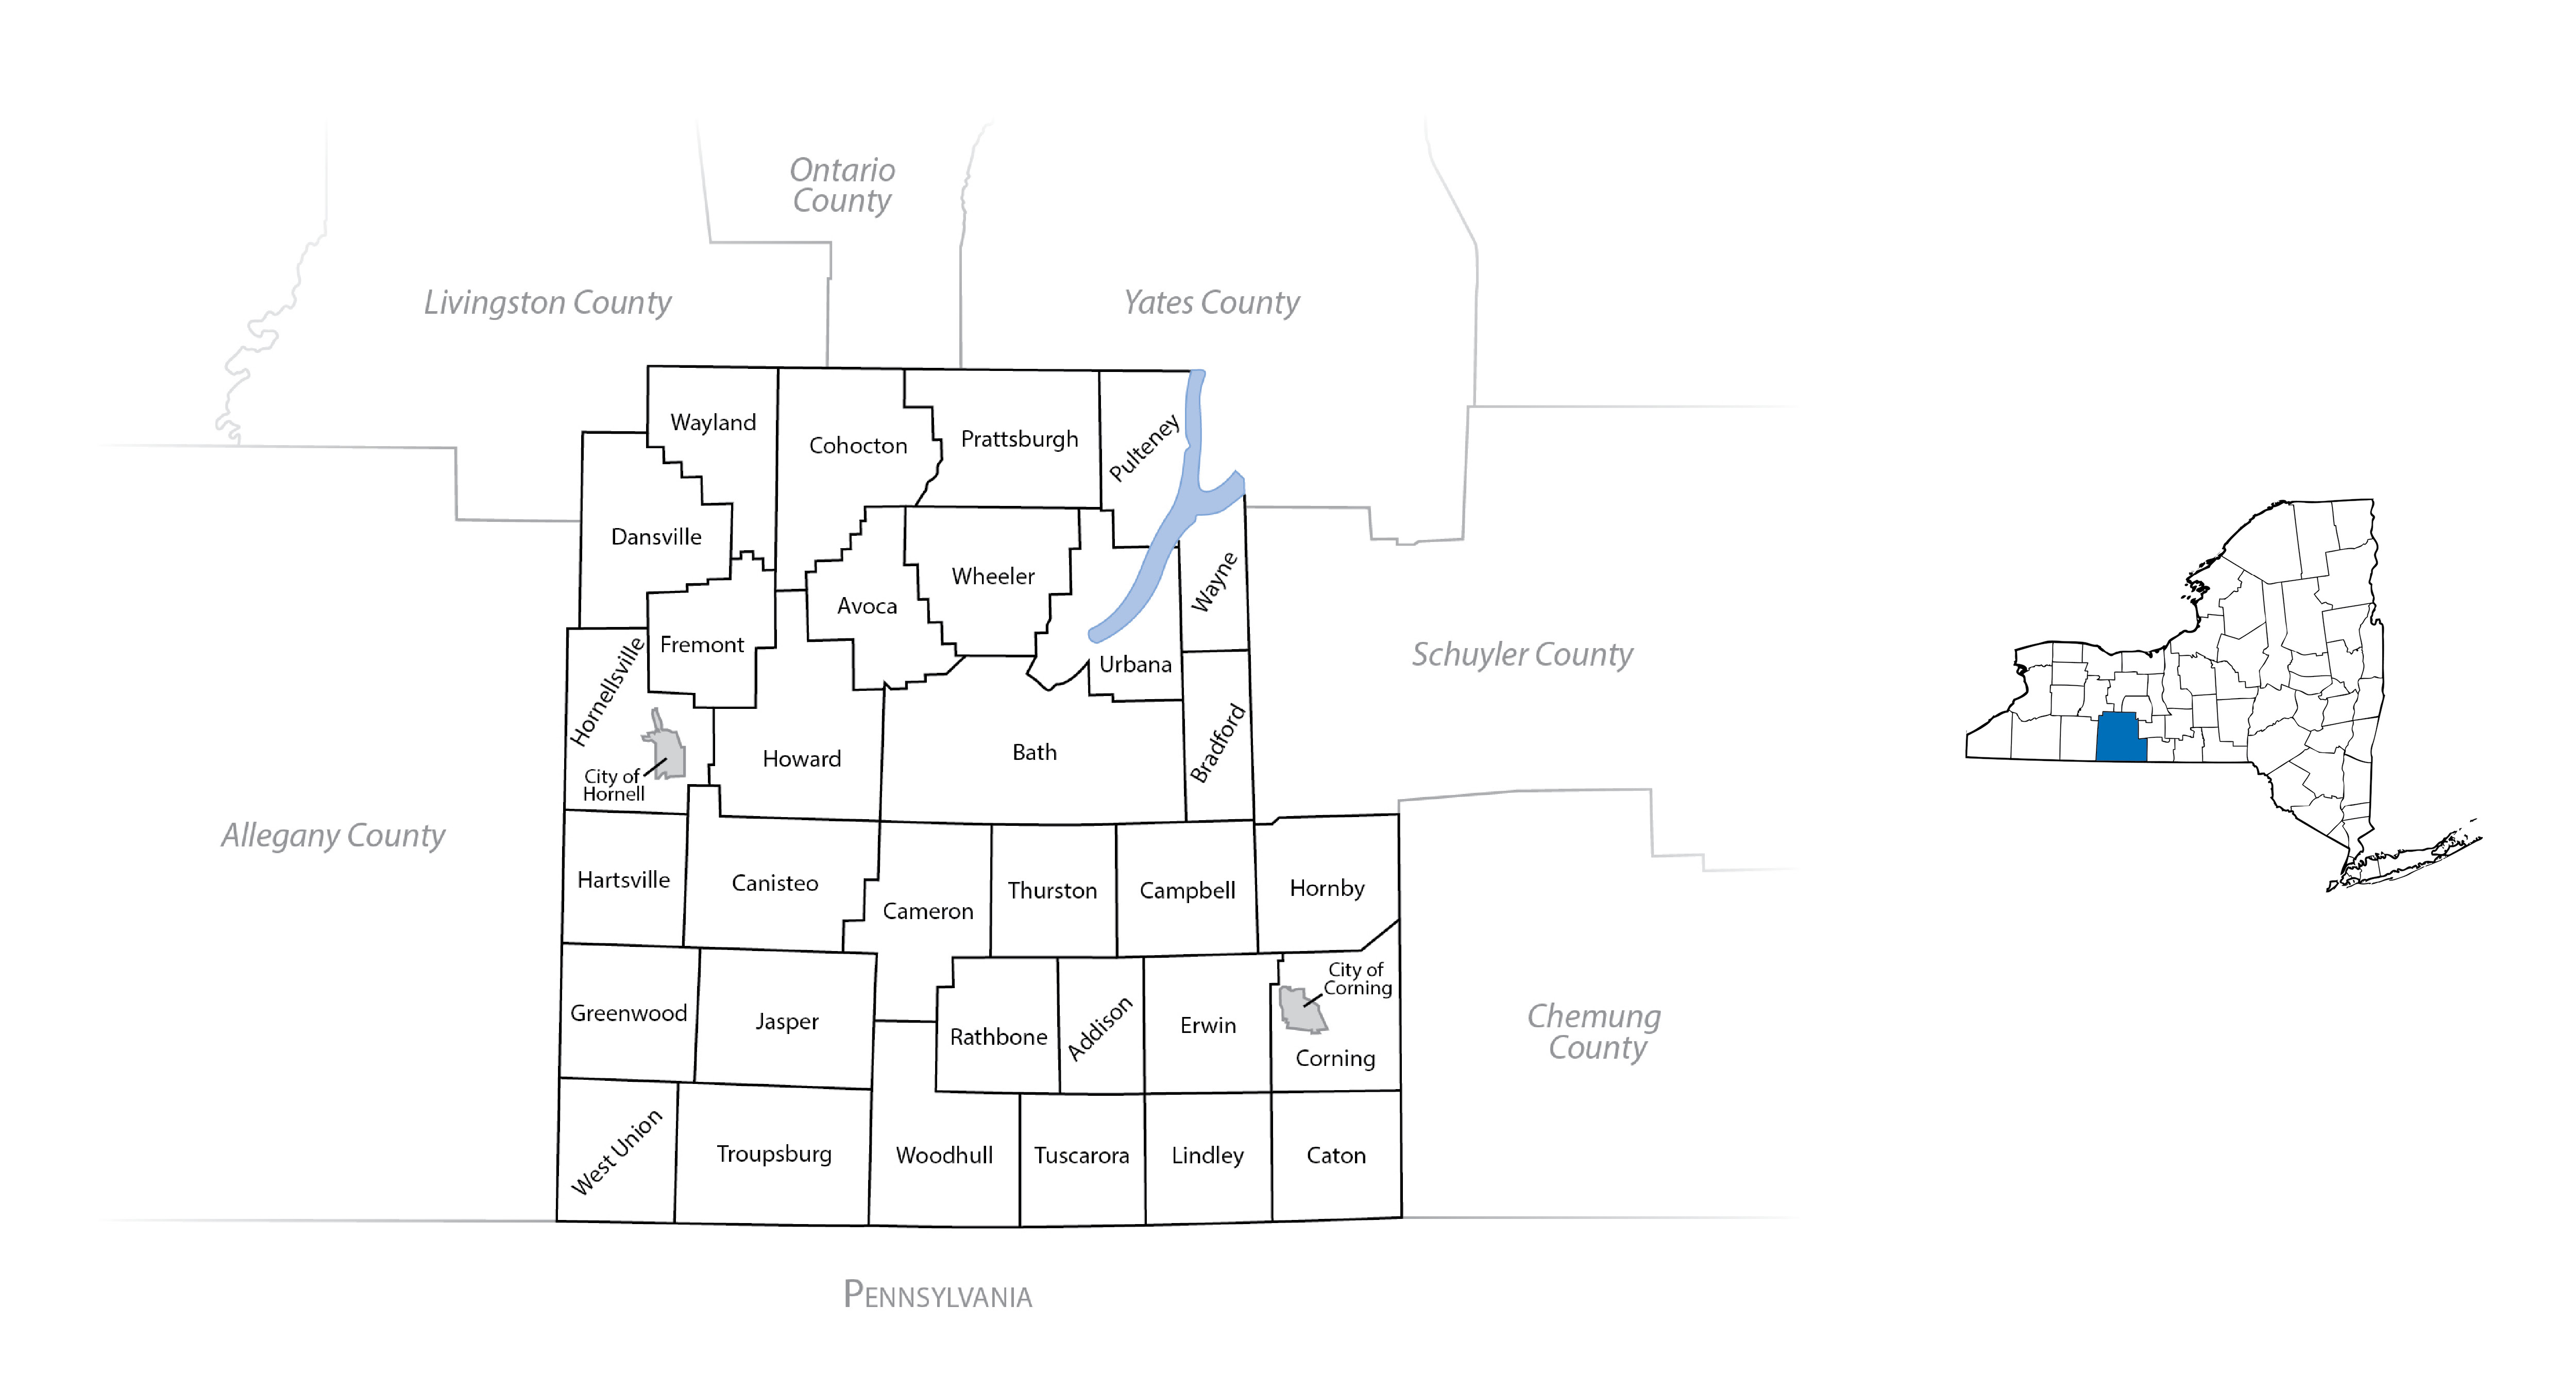 Steuben County Map